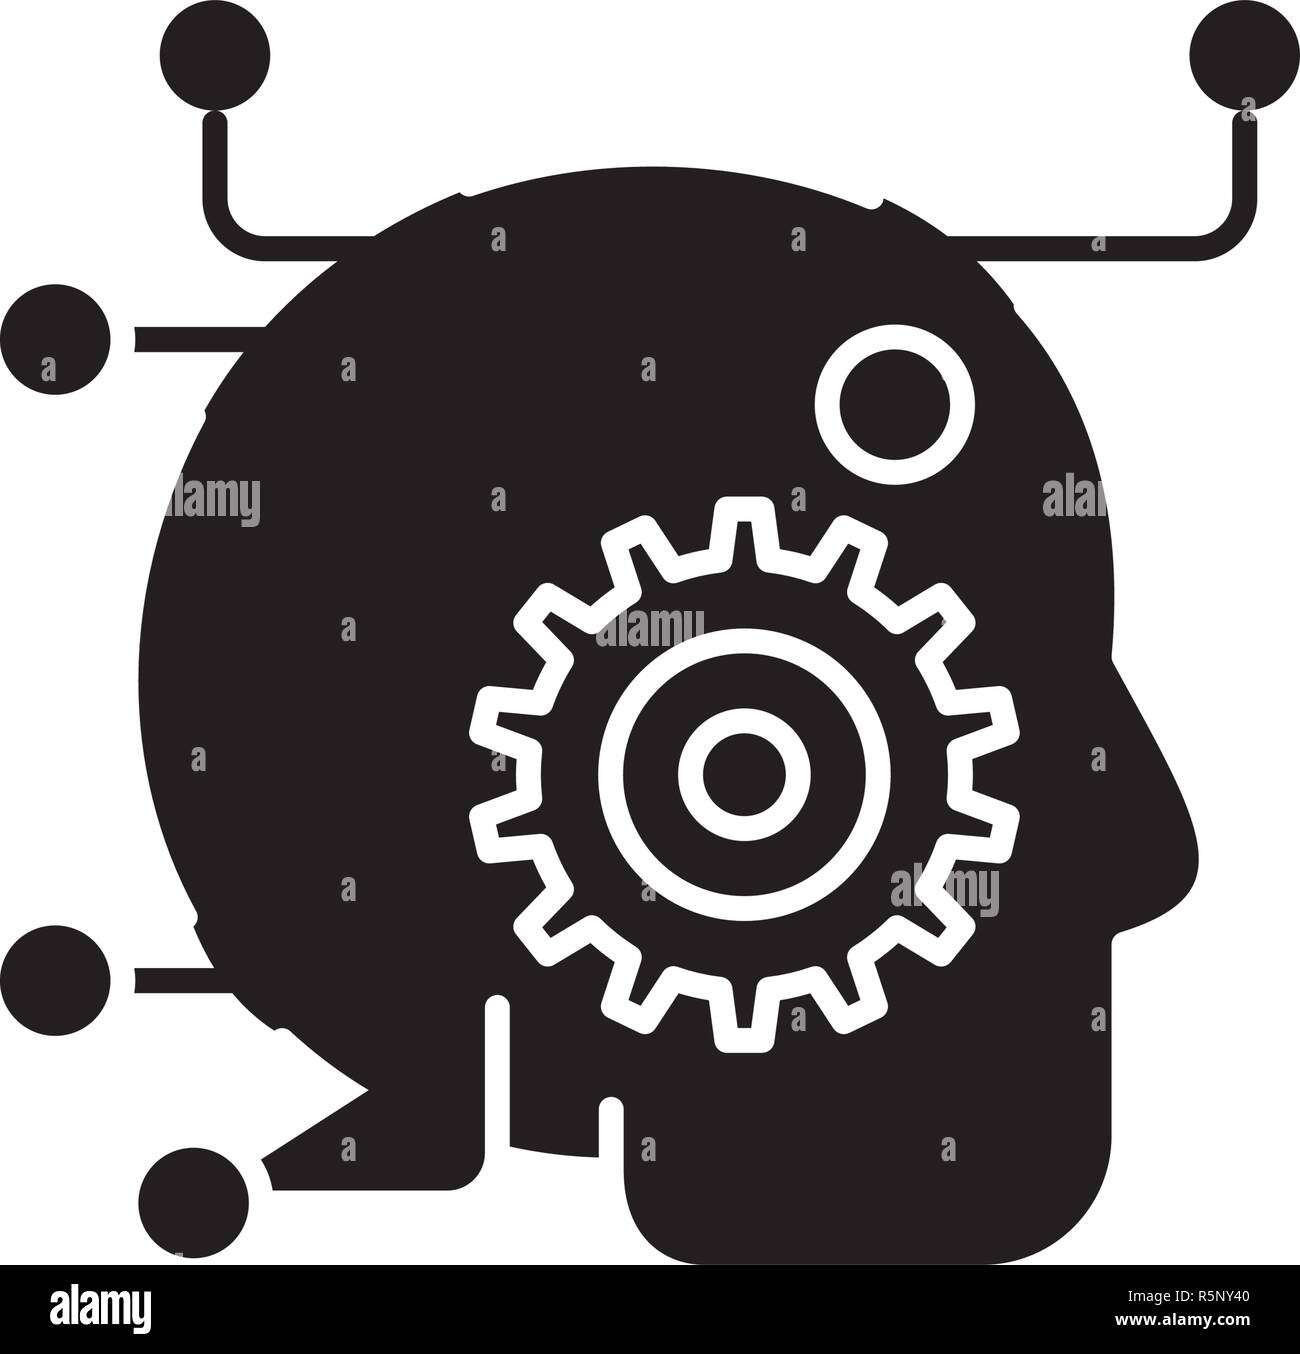 Artificial intelligence black icon, vector sign on isolated background. Artificial intelligence concept symbol, illustration  Stock Vector